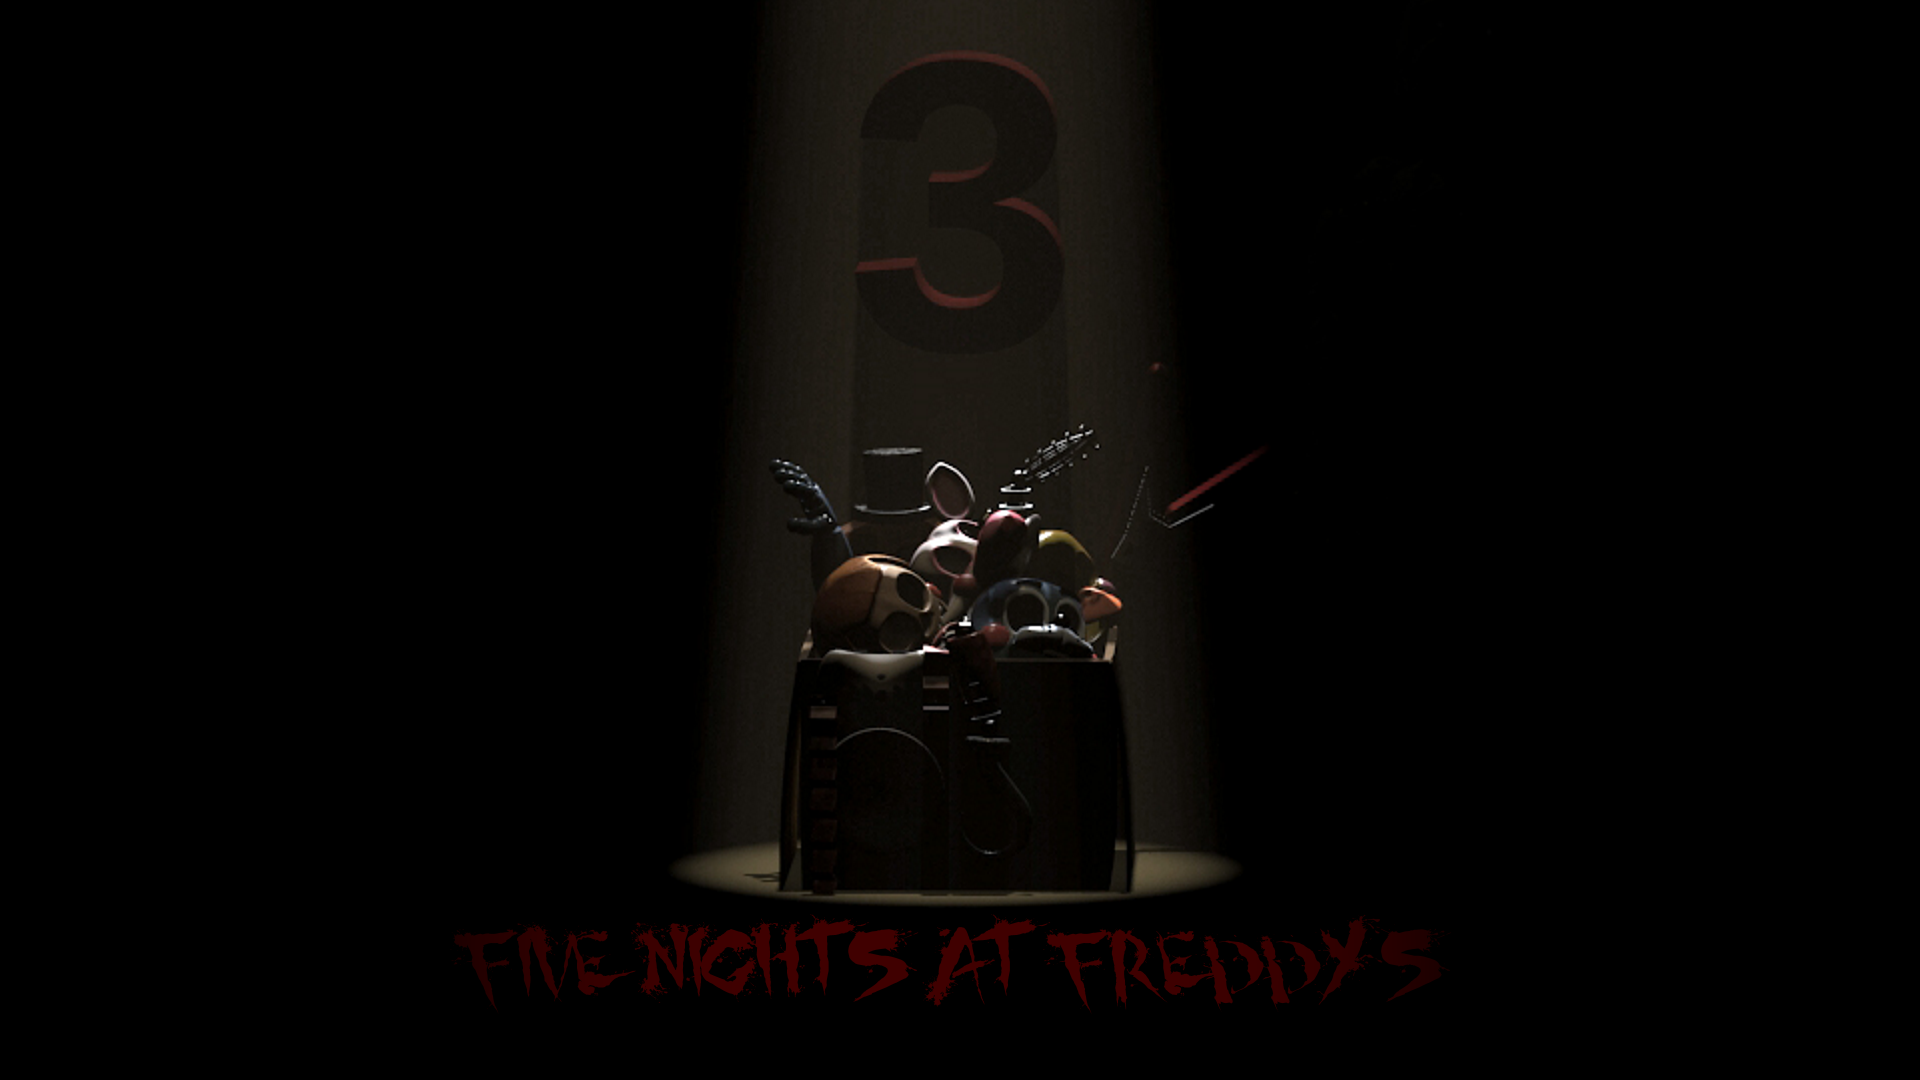 Five Nights at Freddy's - WALLPAPER by Julunis14 on DeviantArt